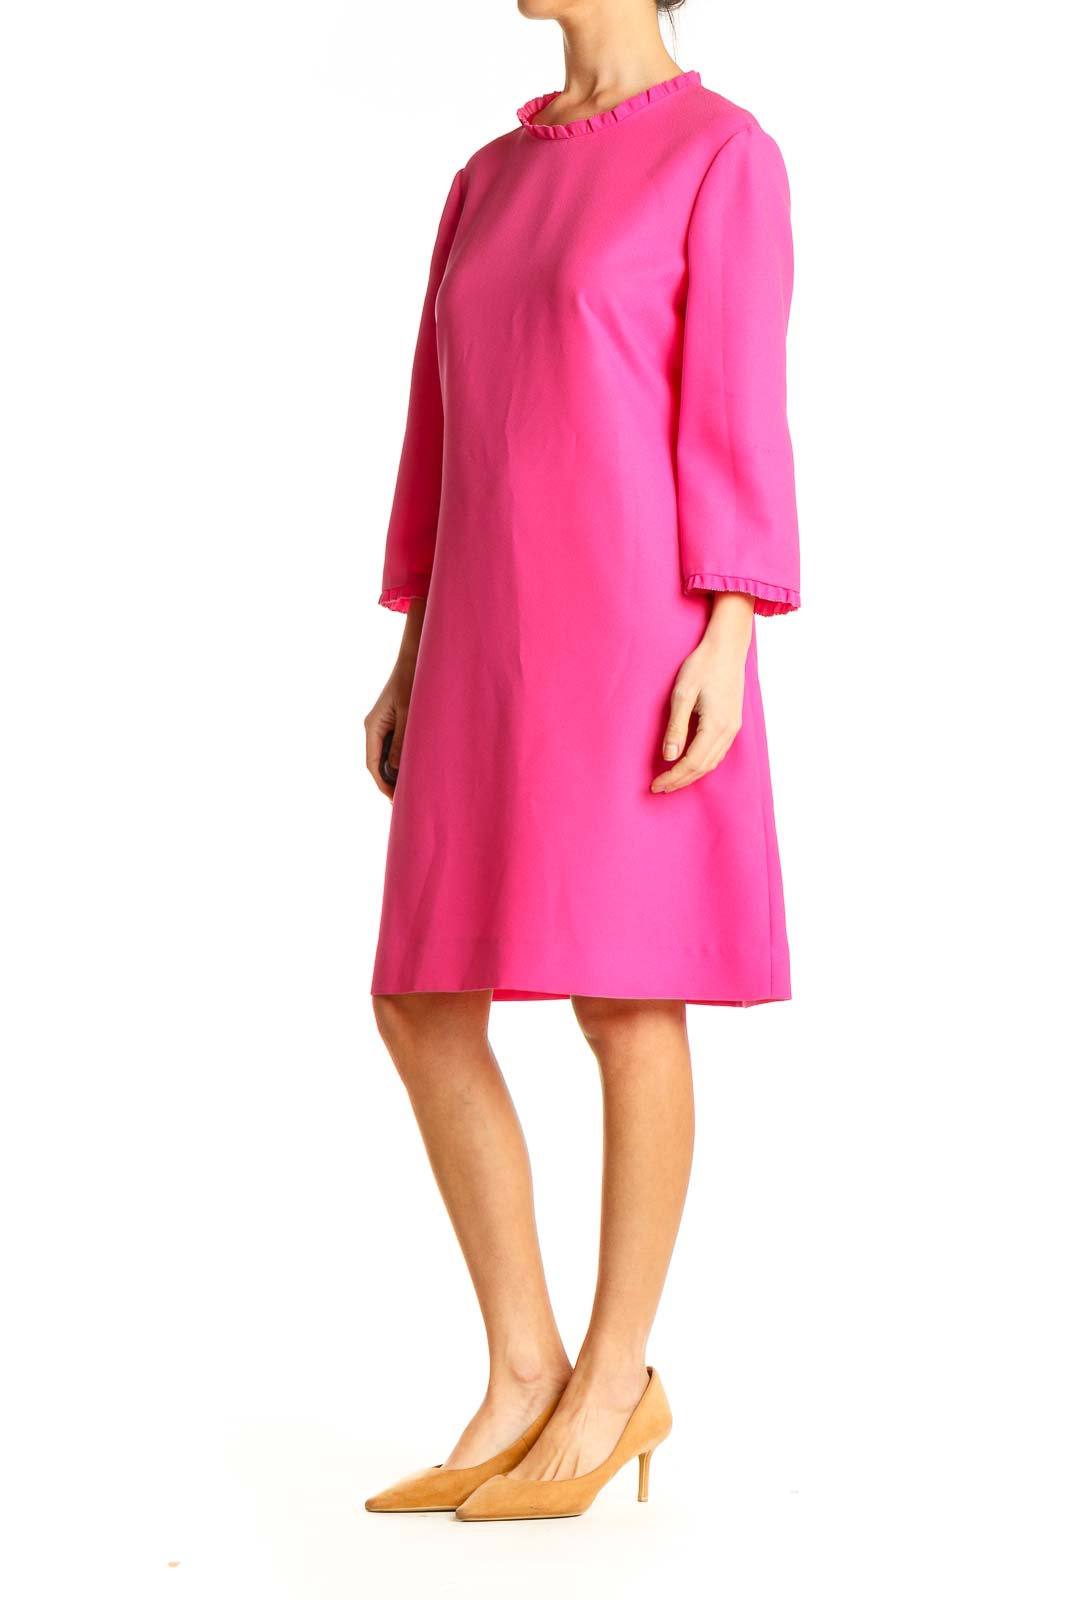 Kate Spade - Pink Classic Shift Dress Polyester | SilkRoll